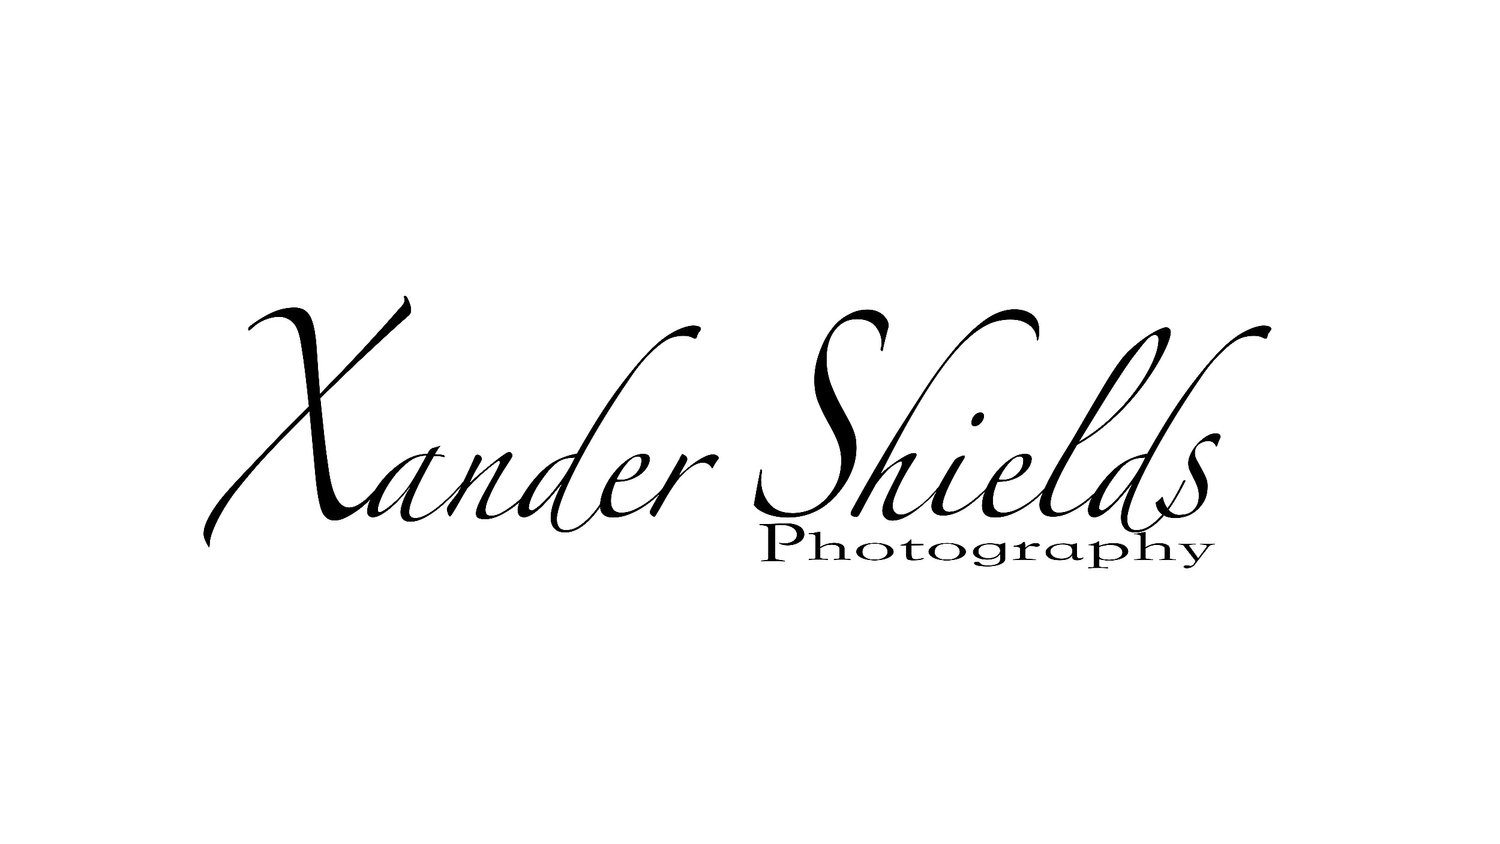 Xander Shields Photography